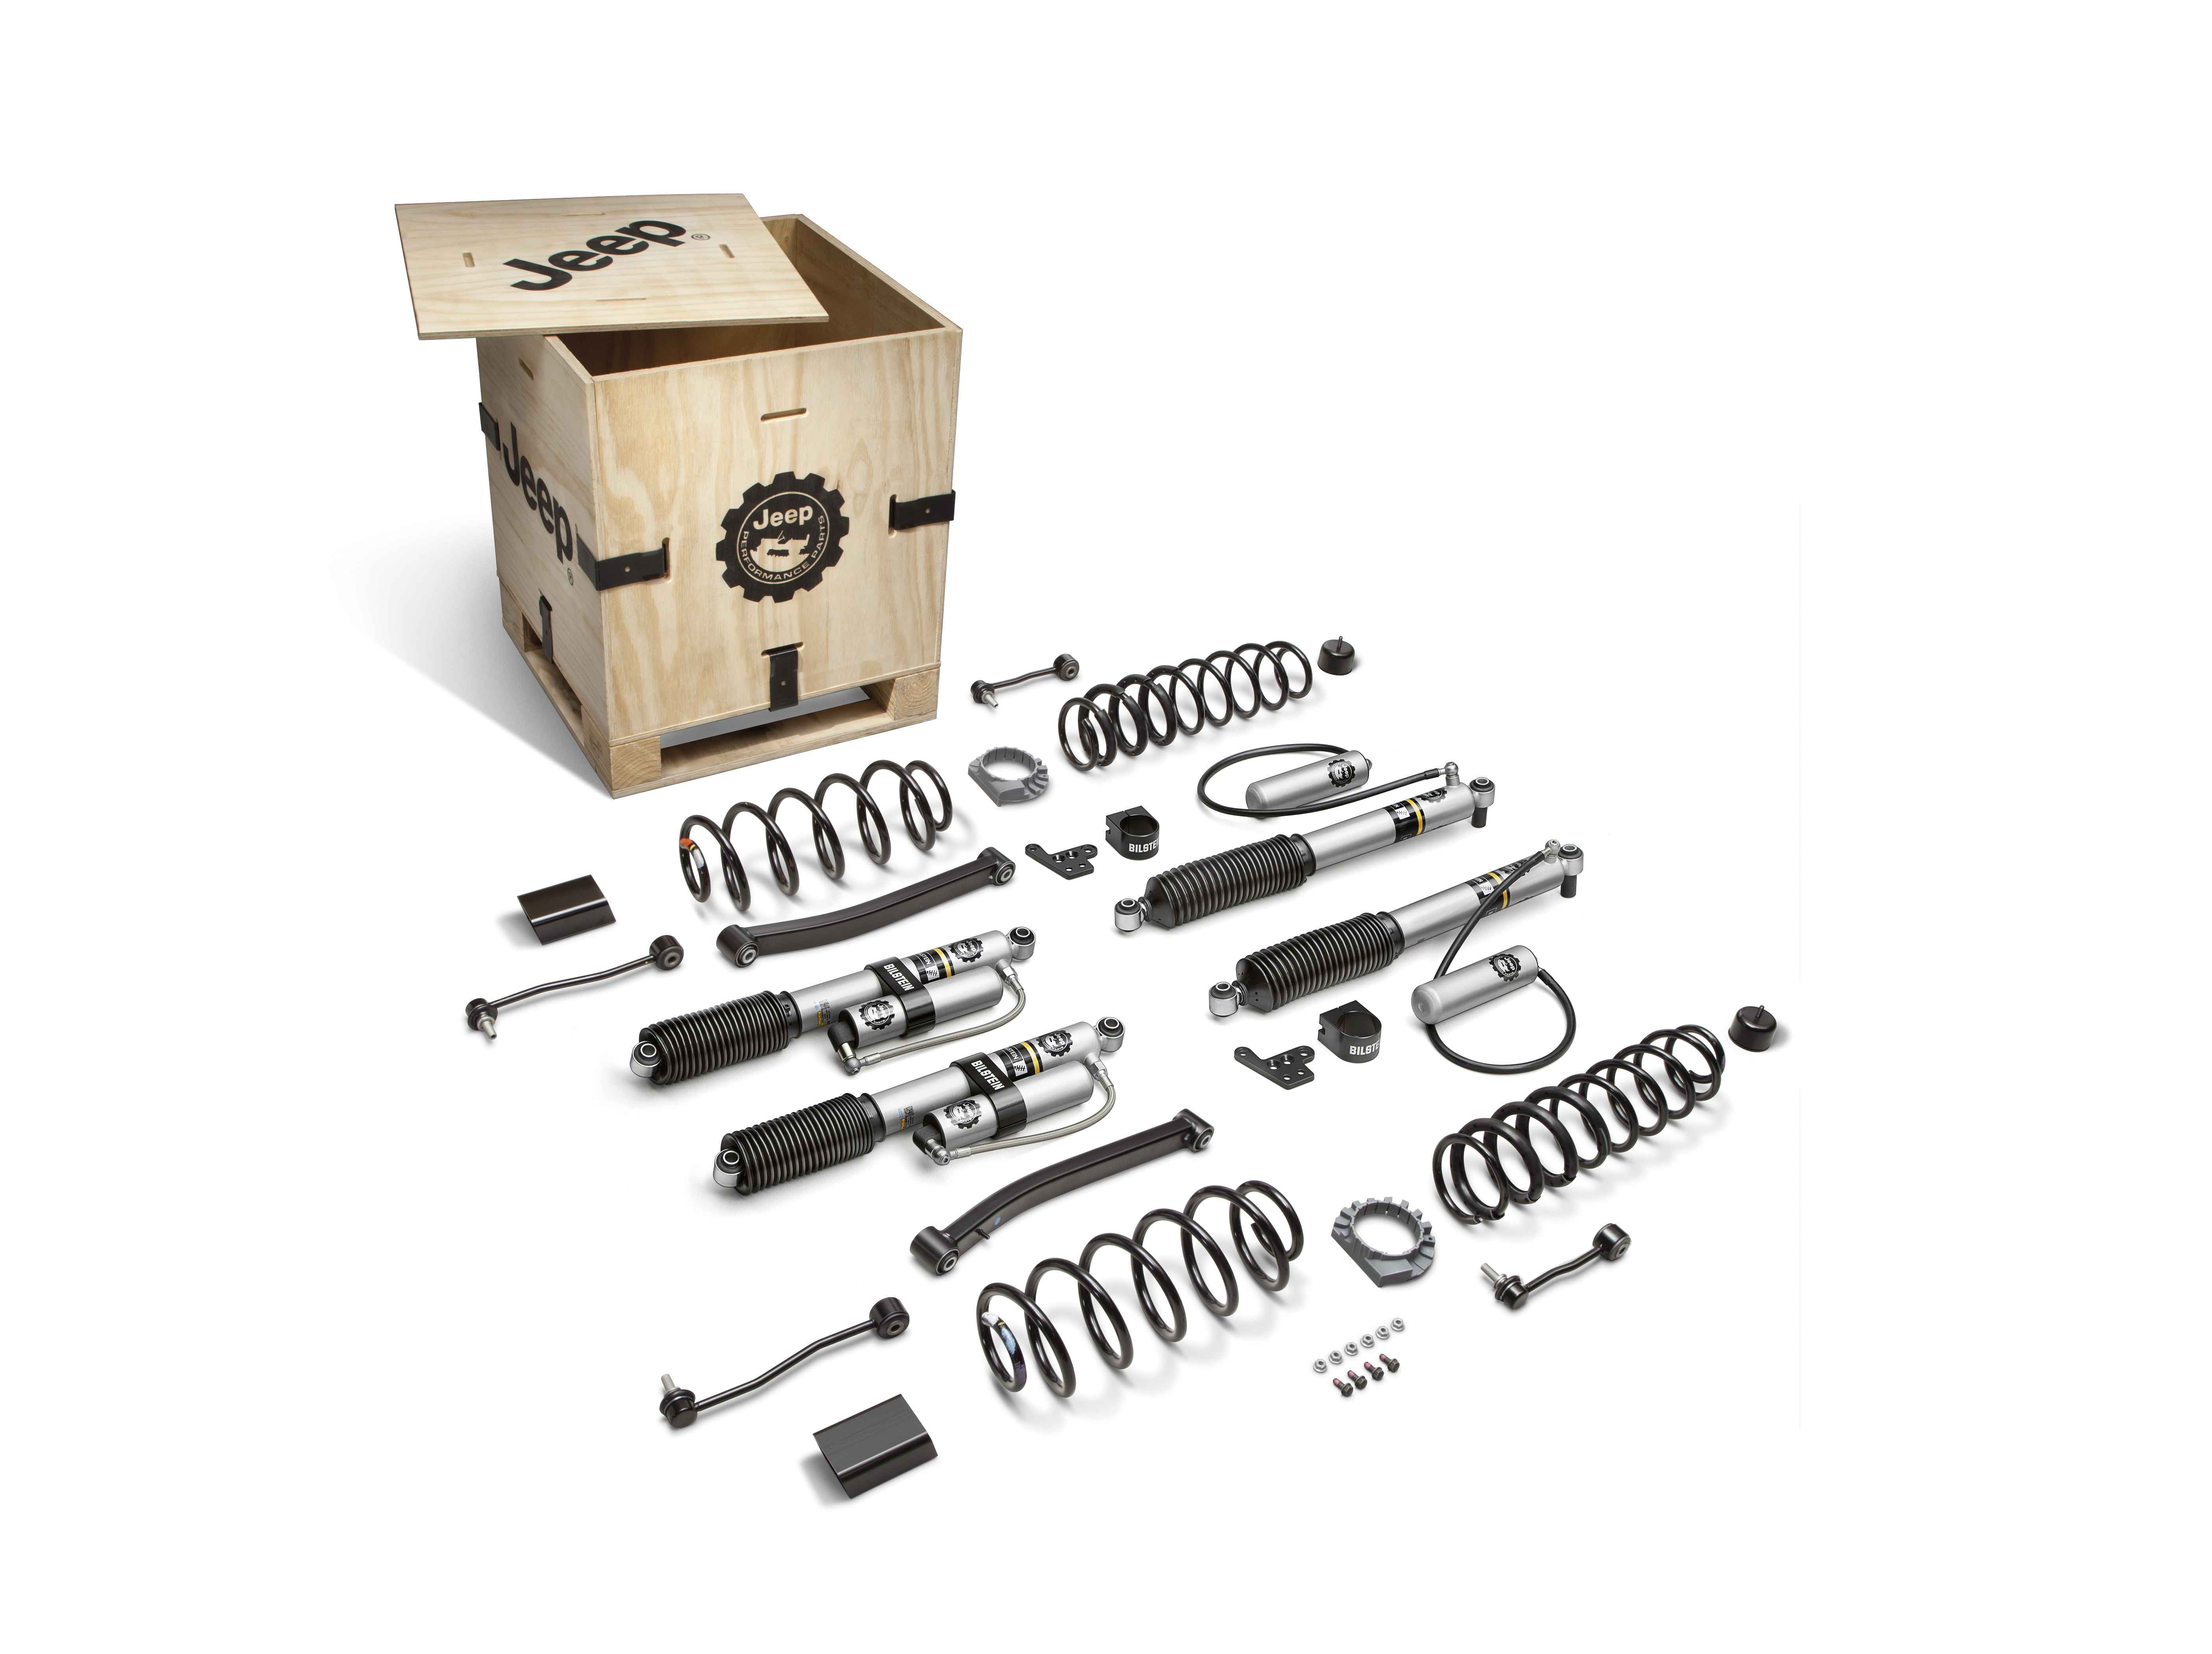 Jeep Performance Parts 2-inch Lift Kit with Bilstein Reservoir Shocks, 36L V6 Engine